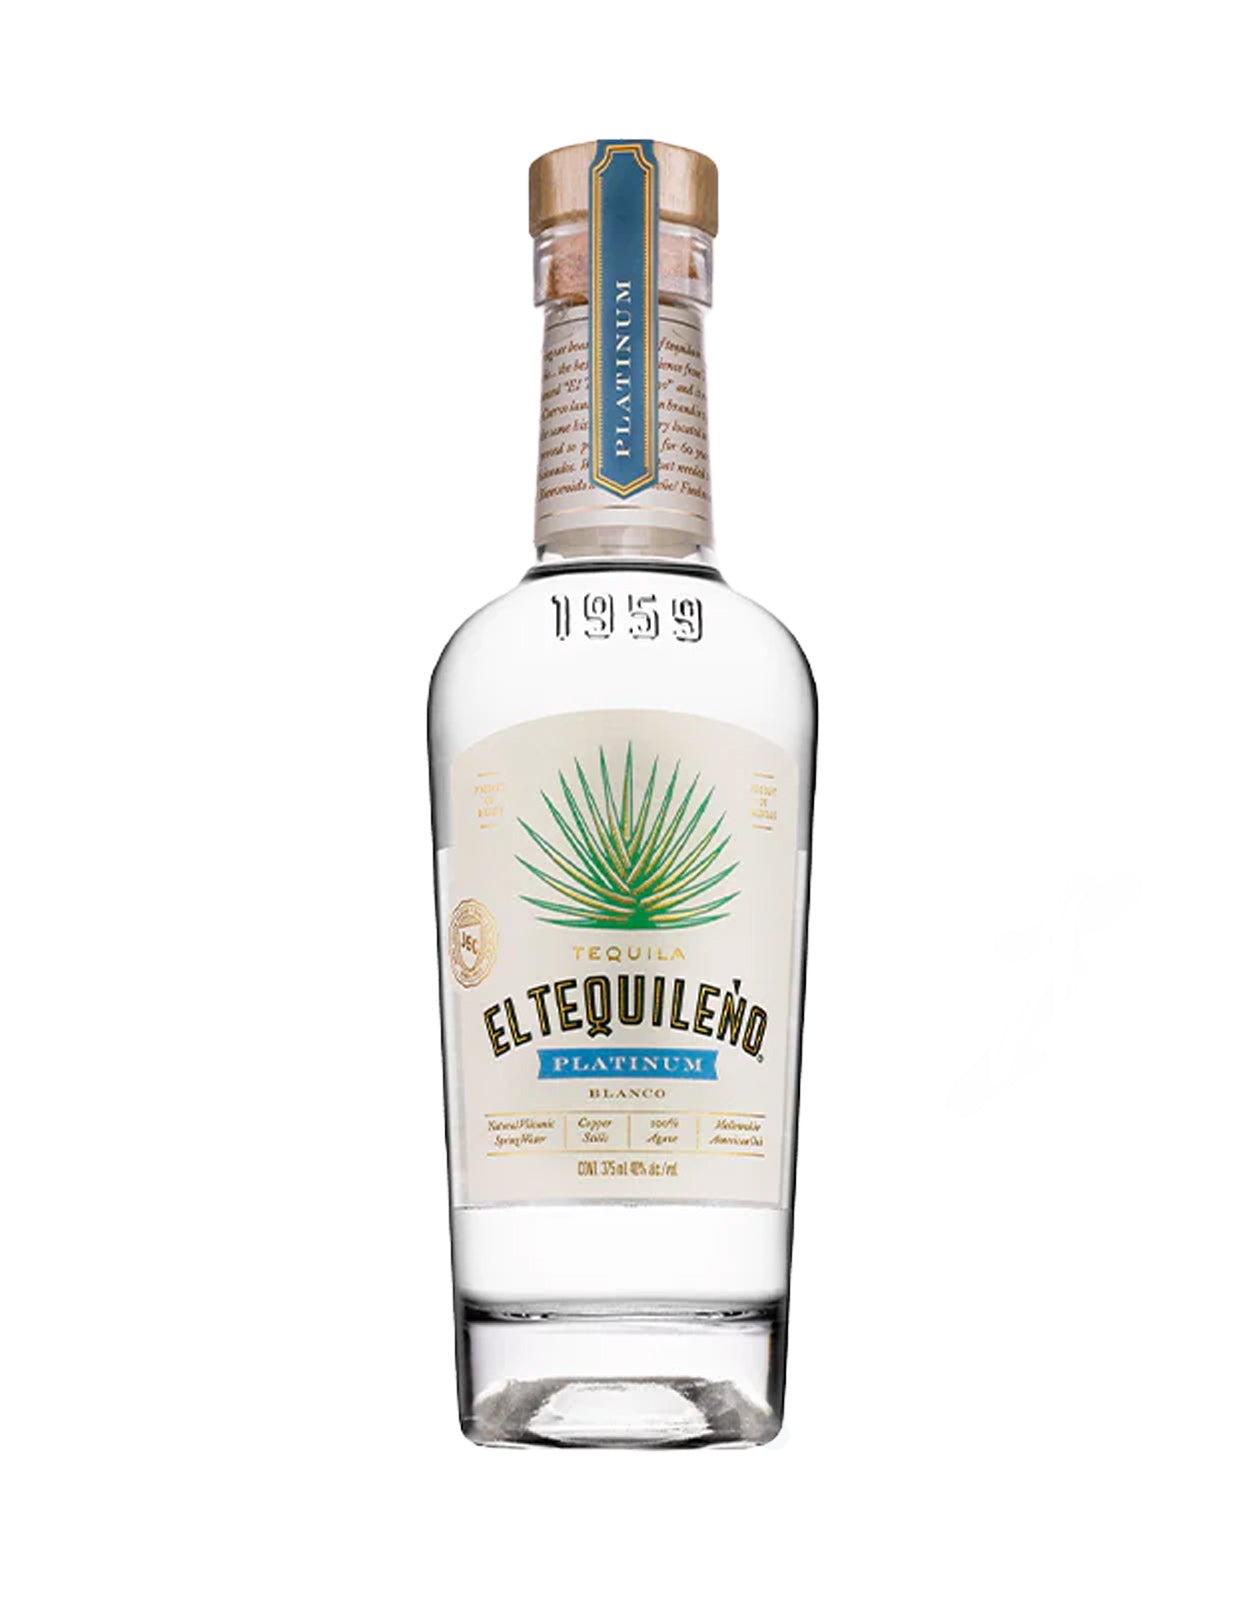 El Tequileno Blanco Platinum Tequila - 375 ml